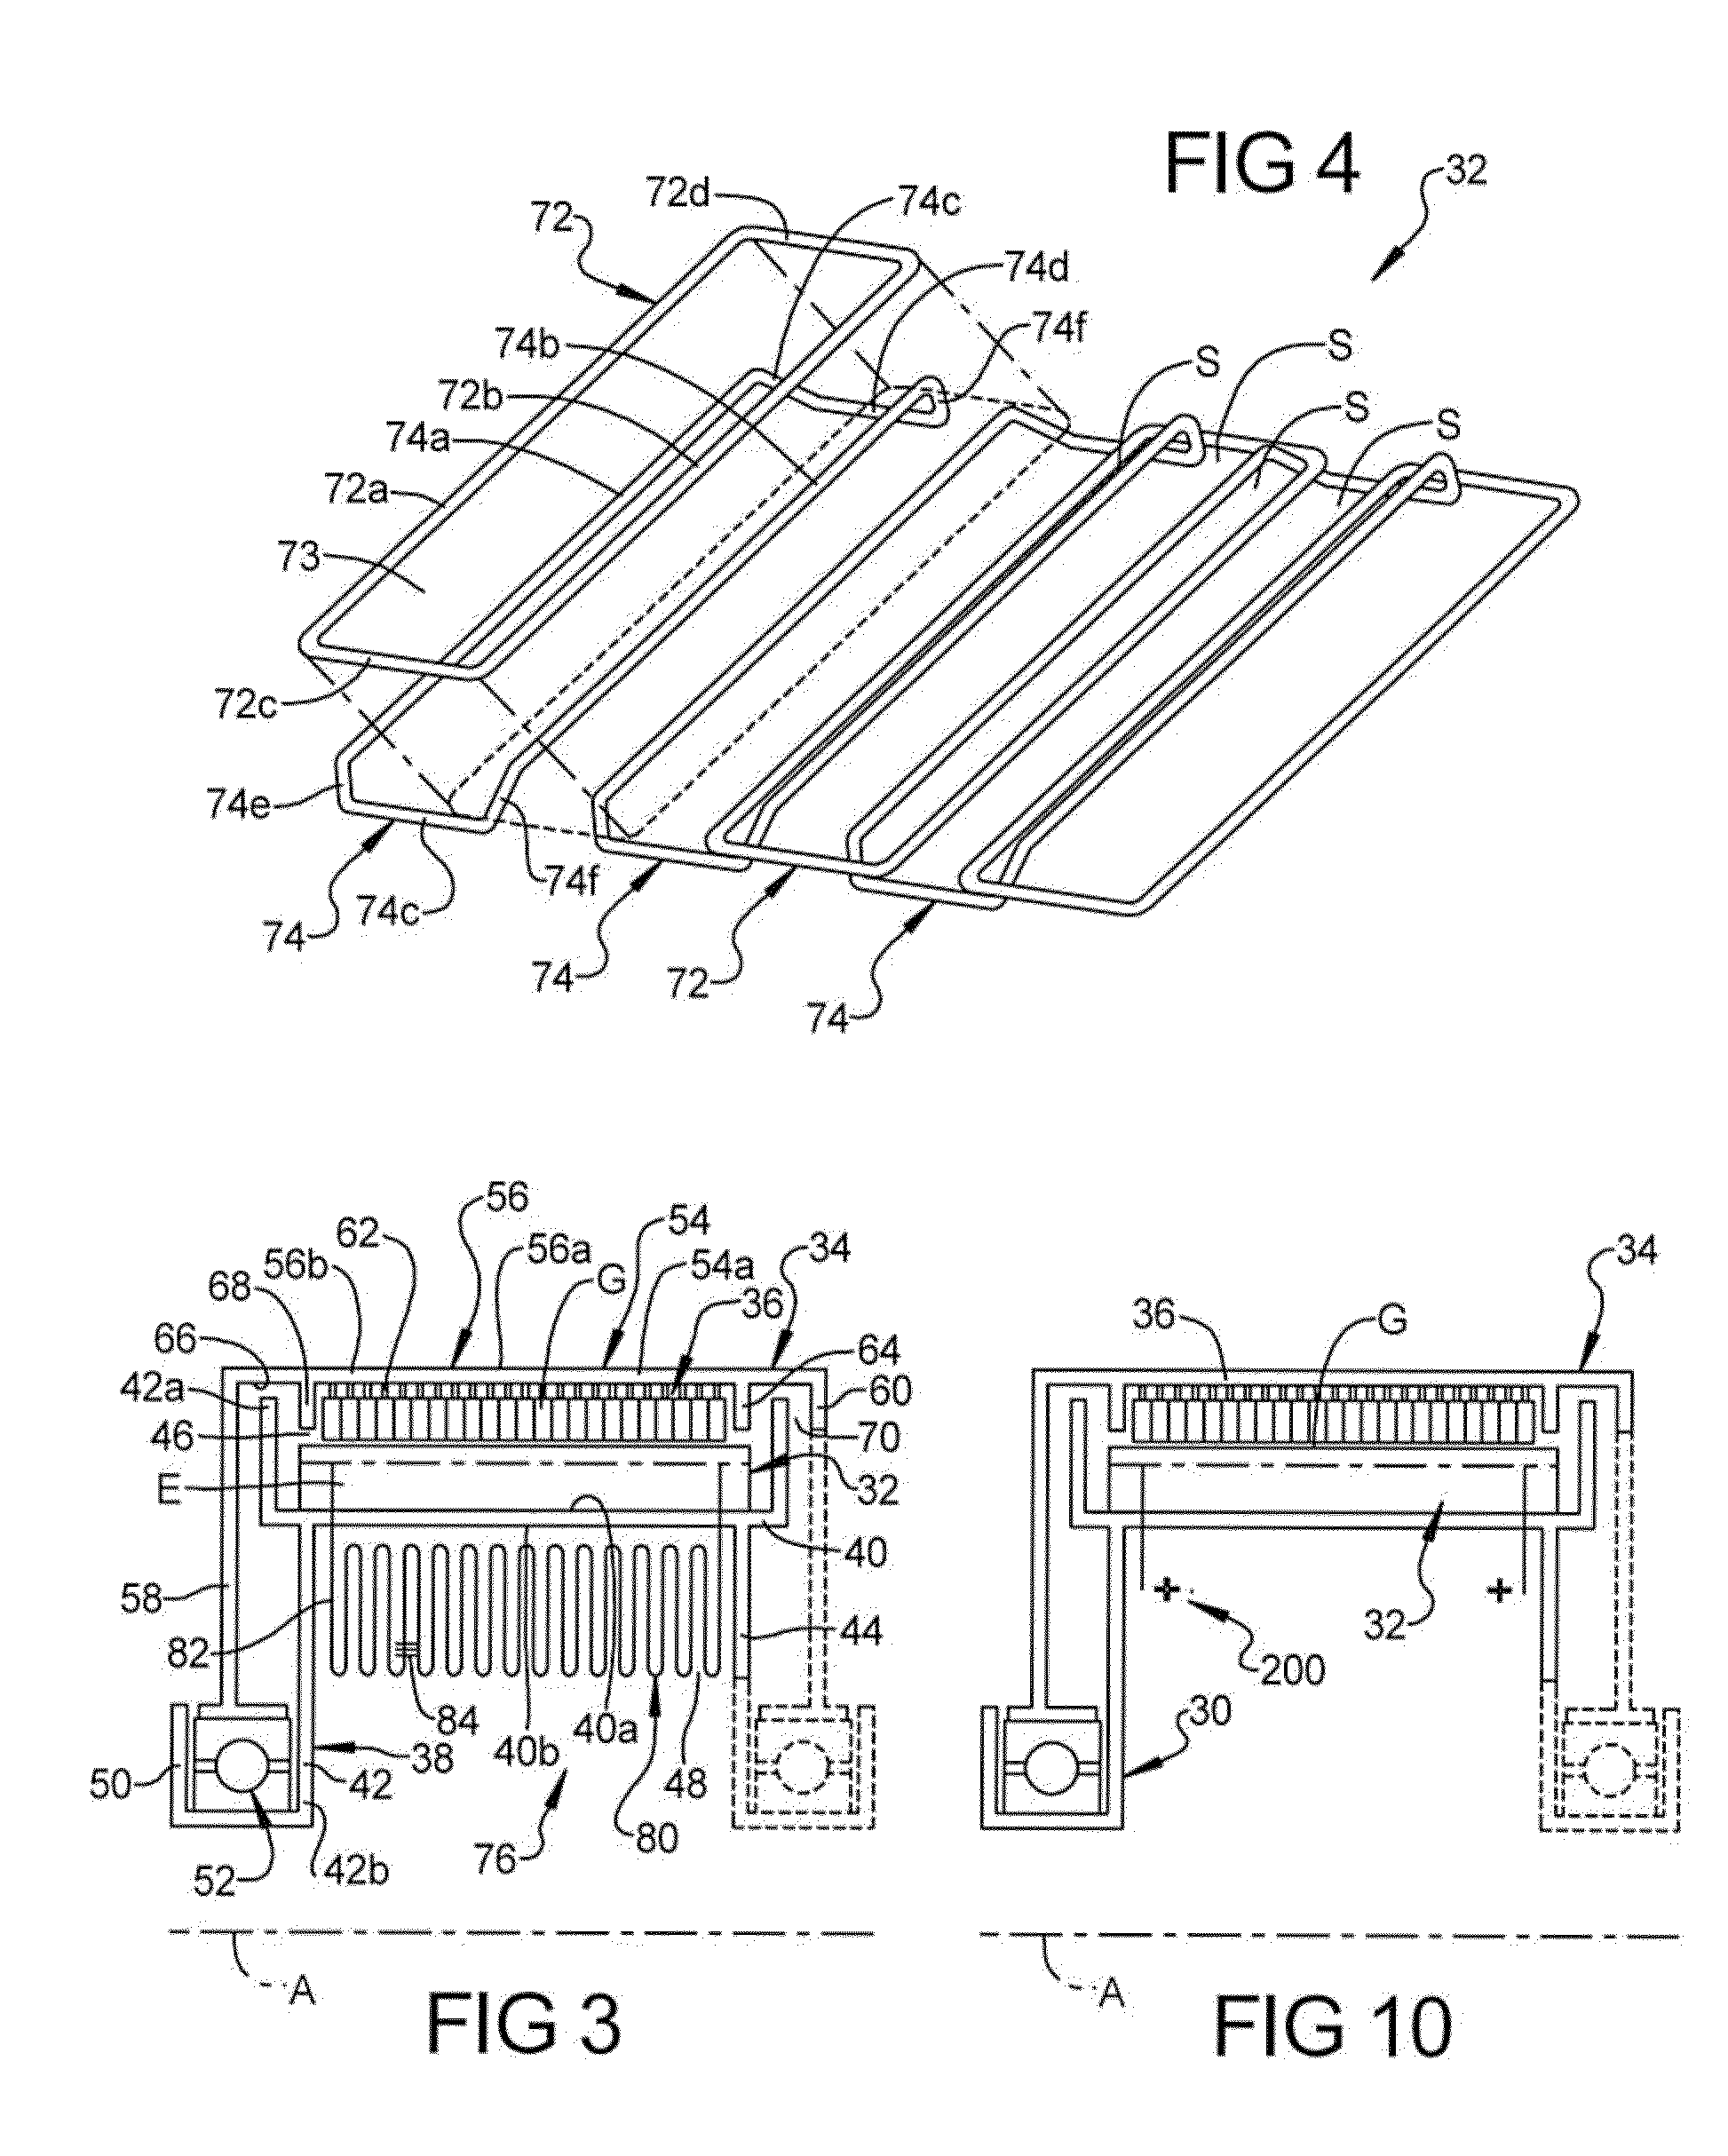 Motor/generator structure